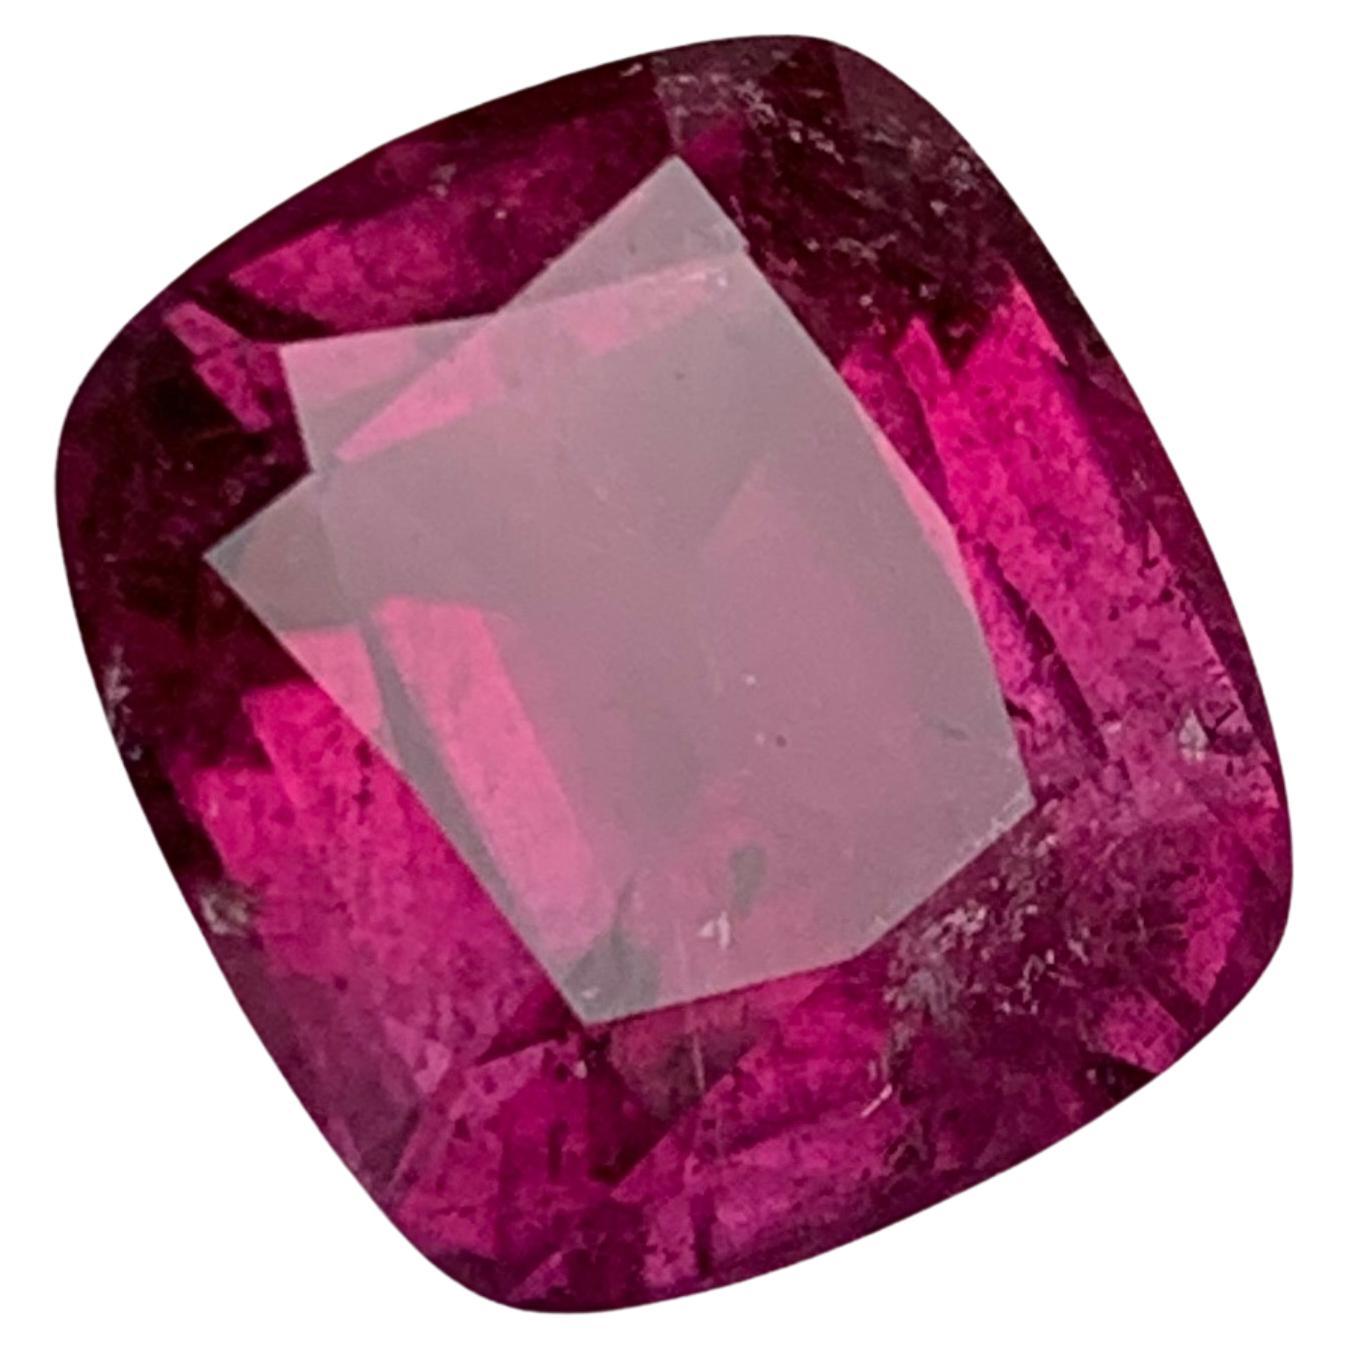 Rare Purplish Pink Natural Rubellite Tourmaline Gemstone, 11.05 Ct Cushion Cut